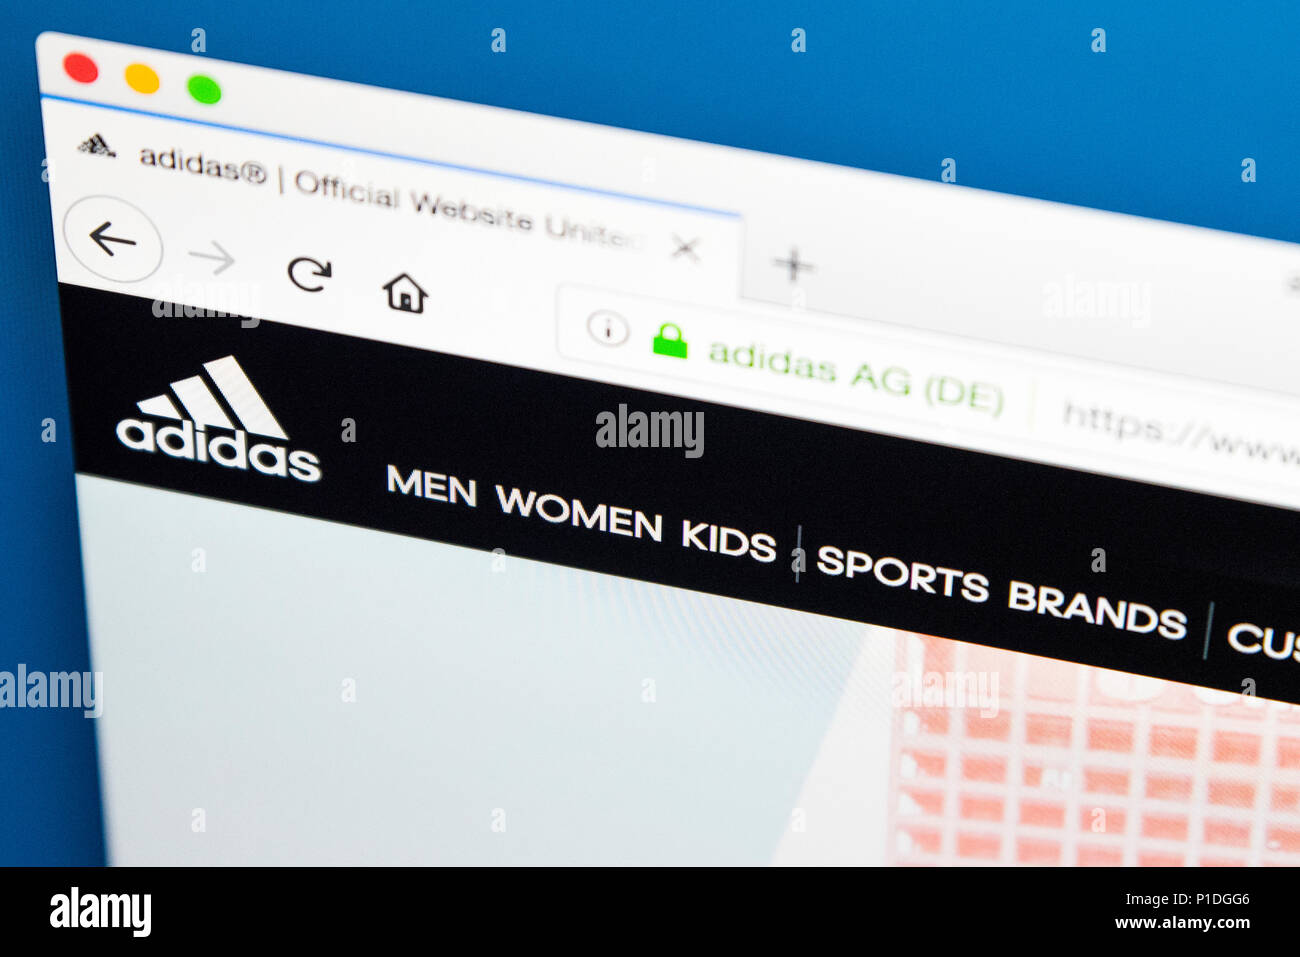 adidas europe website